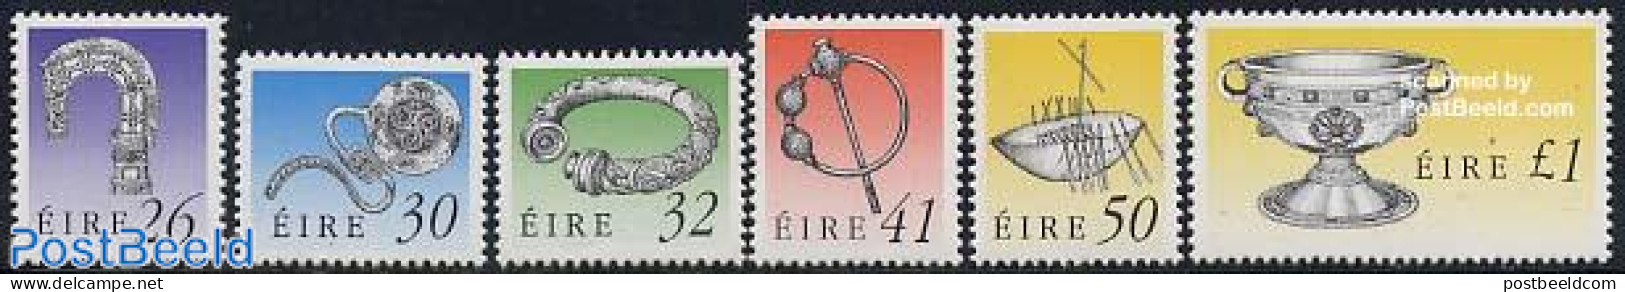 Ireland 1990 Definitives 6v, Mint NH, Art - Art & Antique Objects - Nuevos